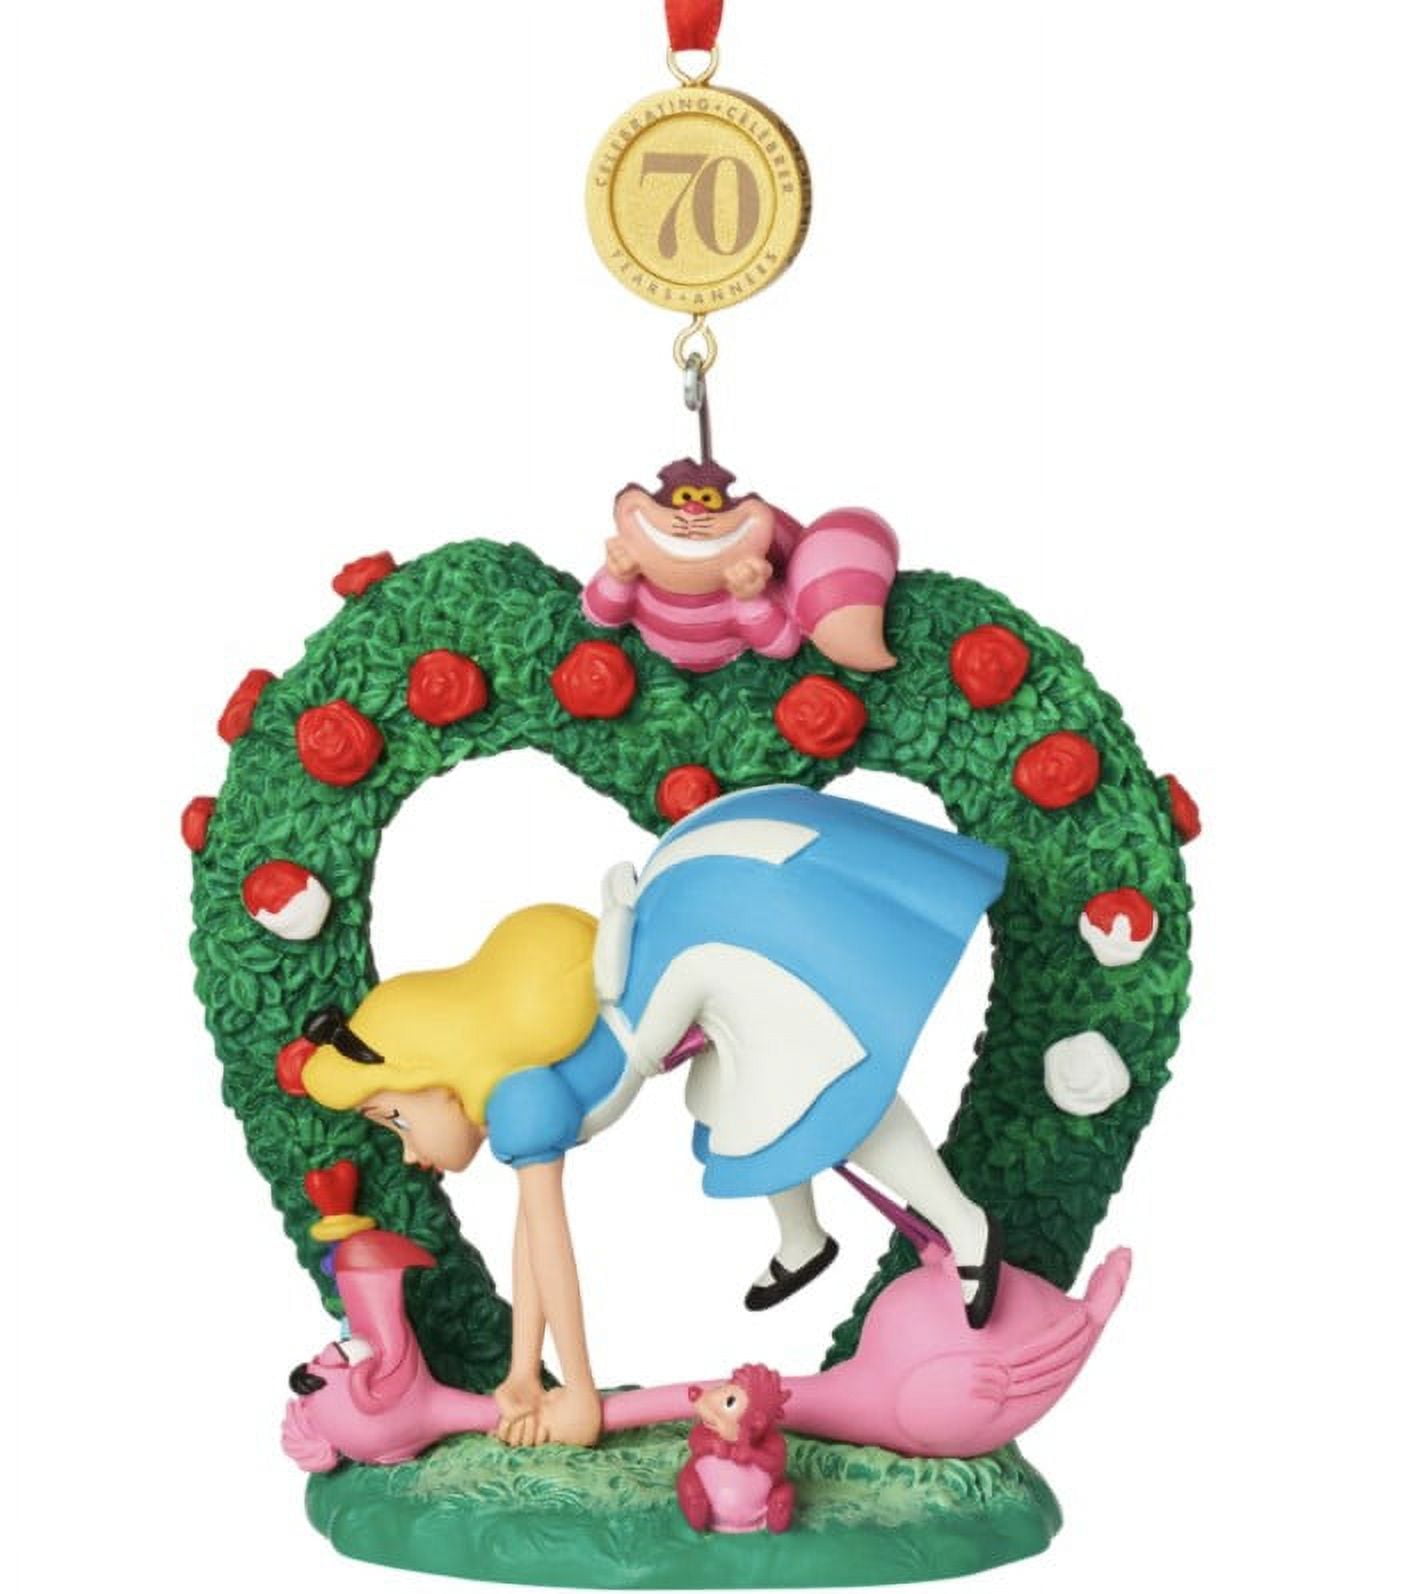 Hallmark 2021 Disney Alice in Wonderland 70th Anniversary Ornament